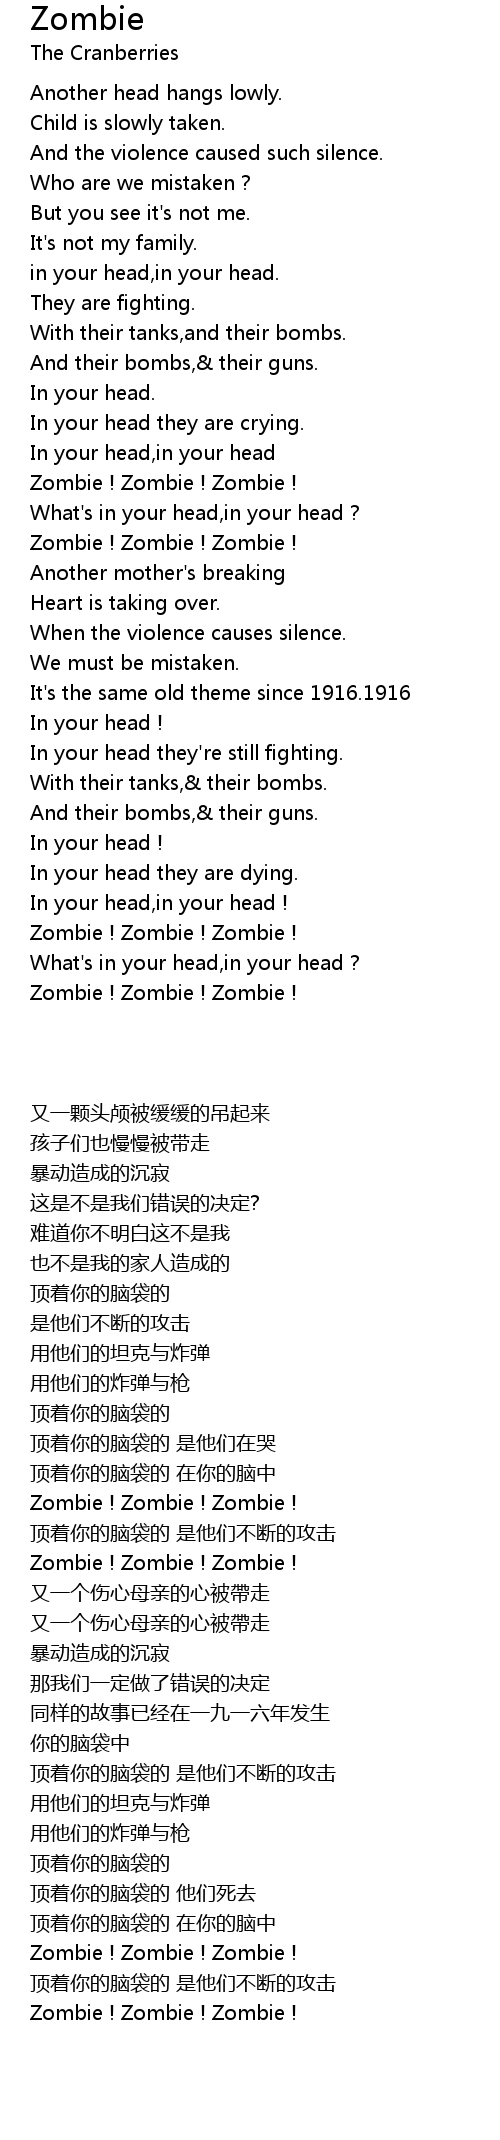 Zombie Lyrics - Earthbend - Only on JioSaavn